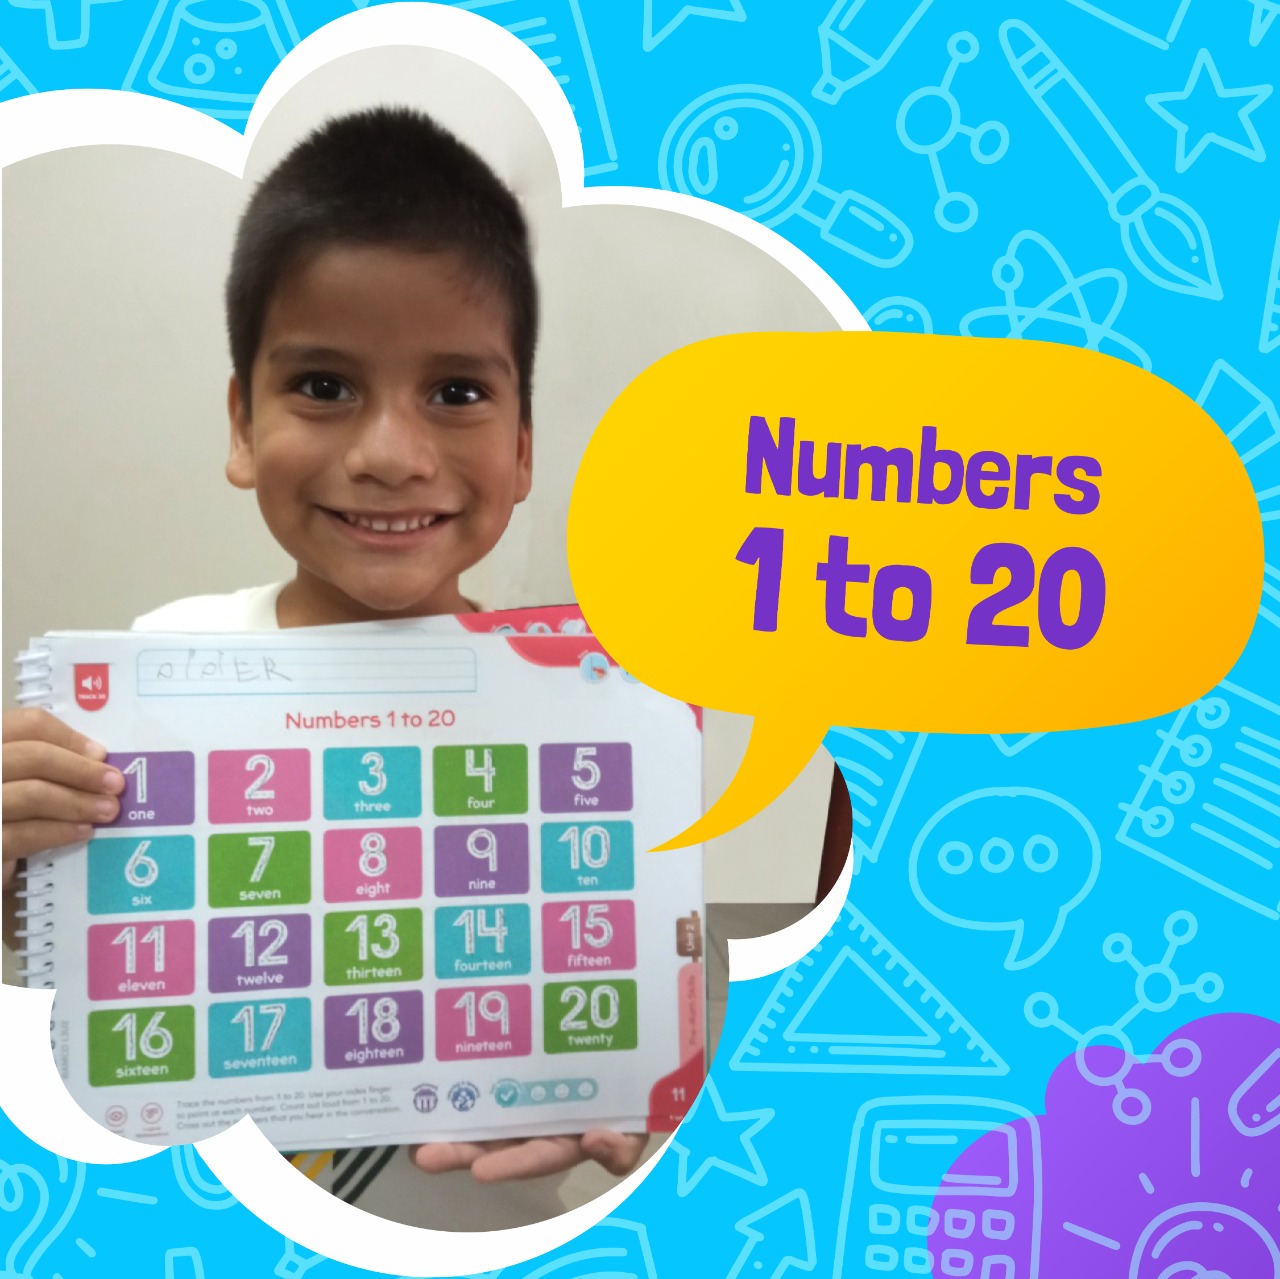 numbers-1-to-20-unidad-educativa-santiago-mayor